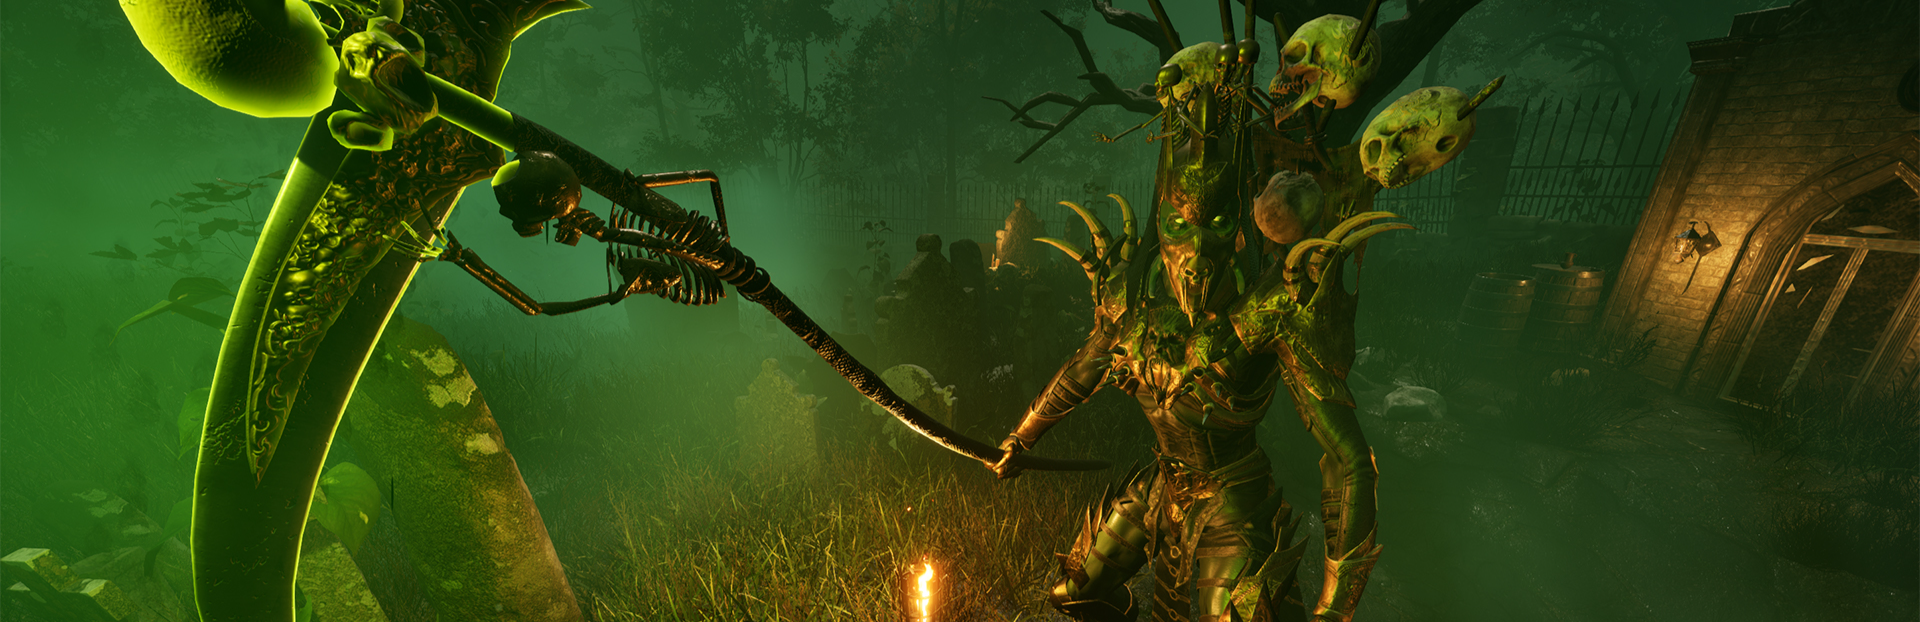 Steam Community :: Guide :: Plants vs. zombies widescreen fix